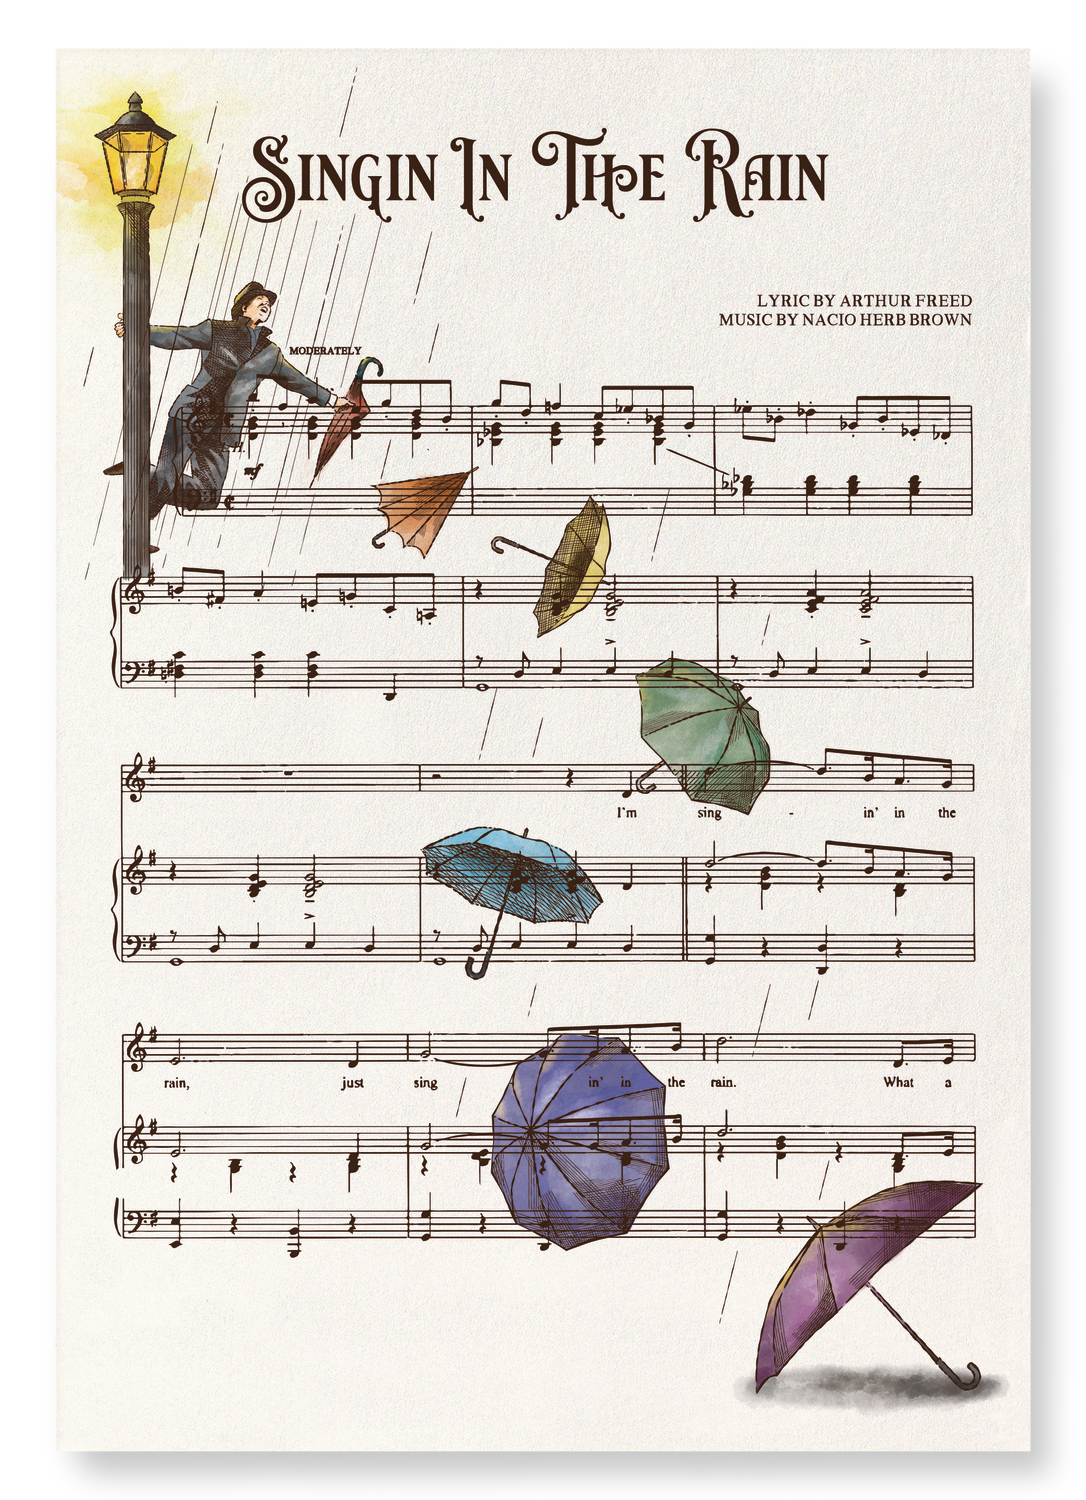 SINGIN’ IN THE RAIN: Victorian Art Print